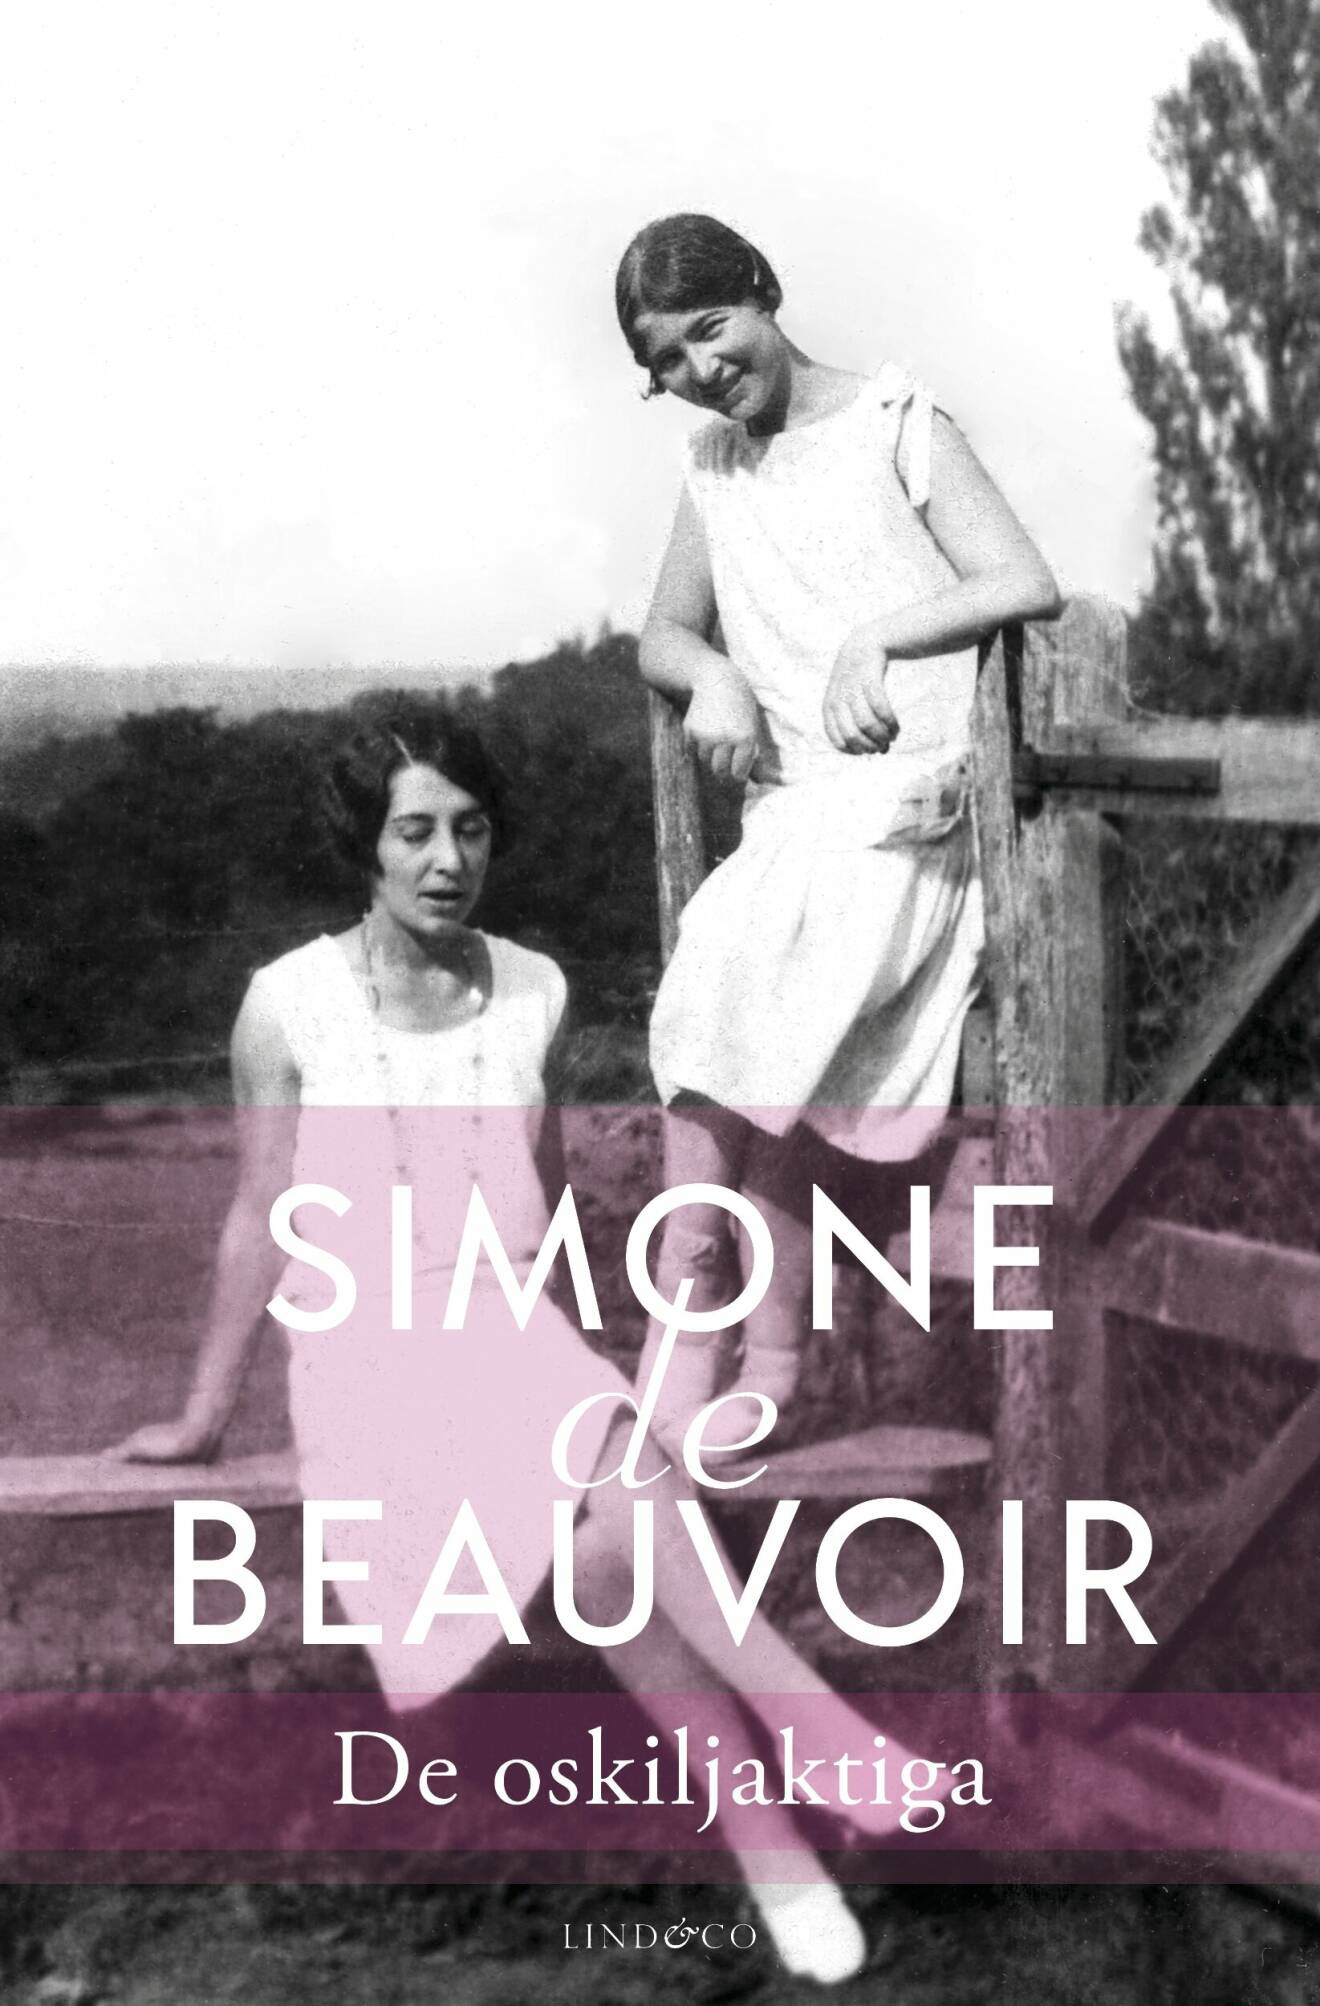 De oskiljaktiga av Simone de Beauvoir.